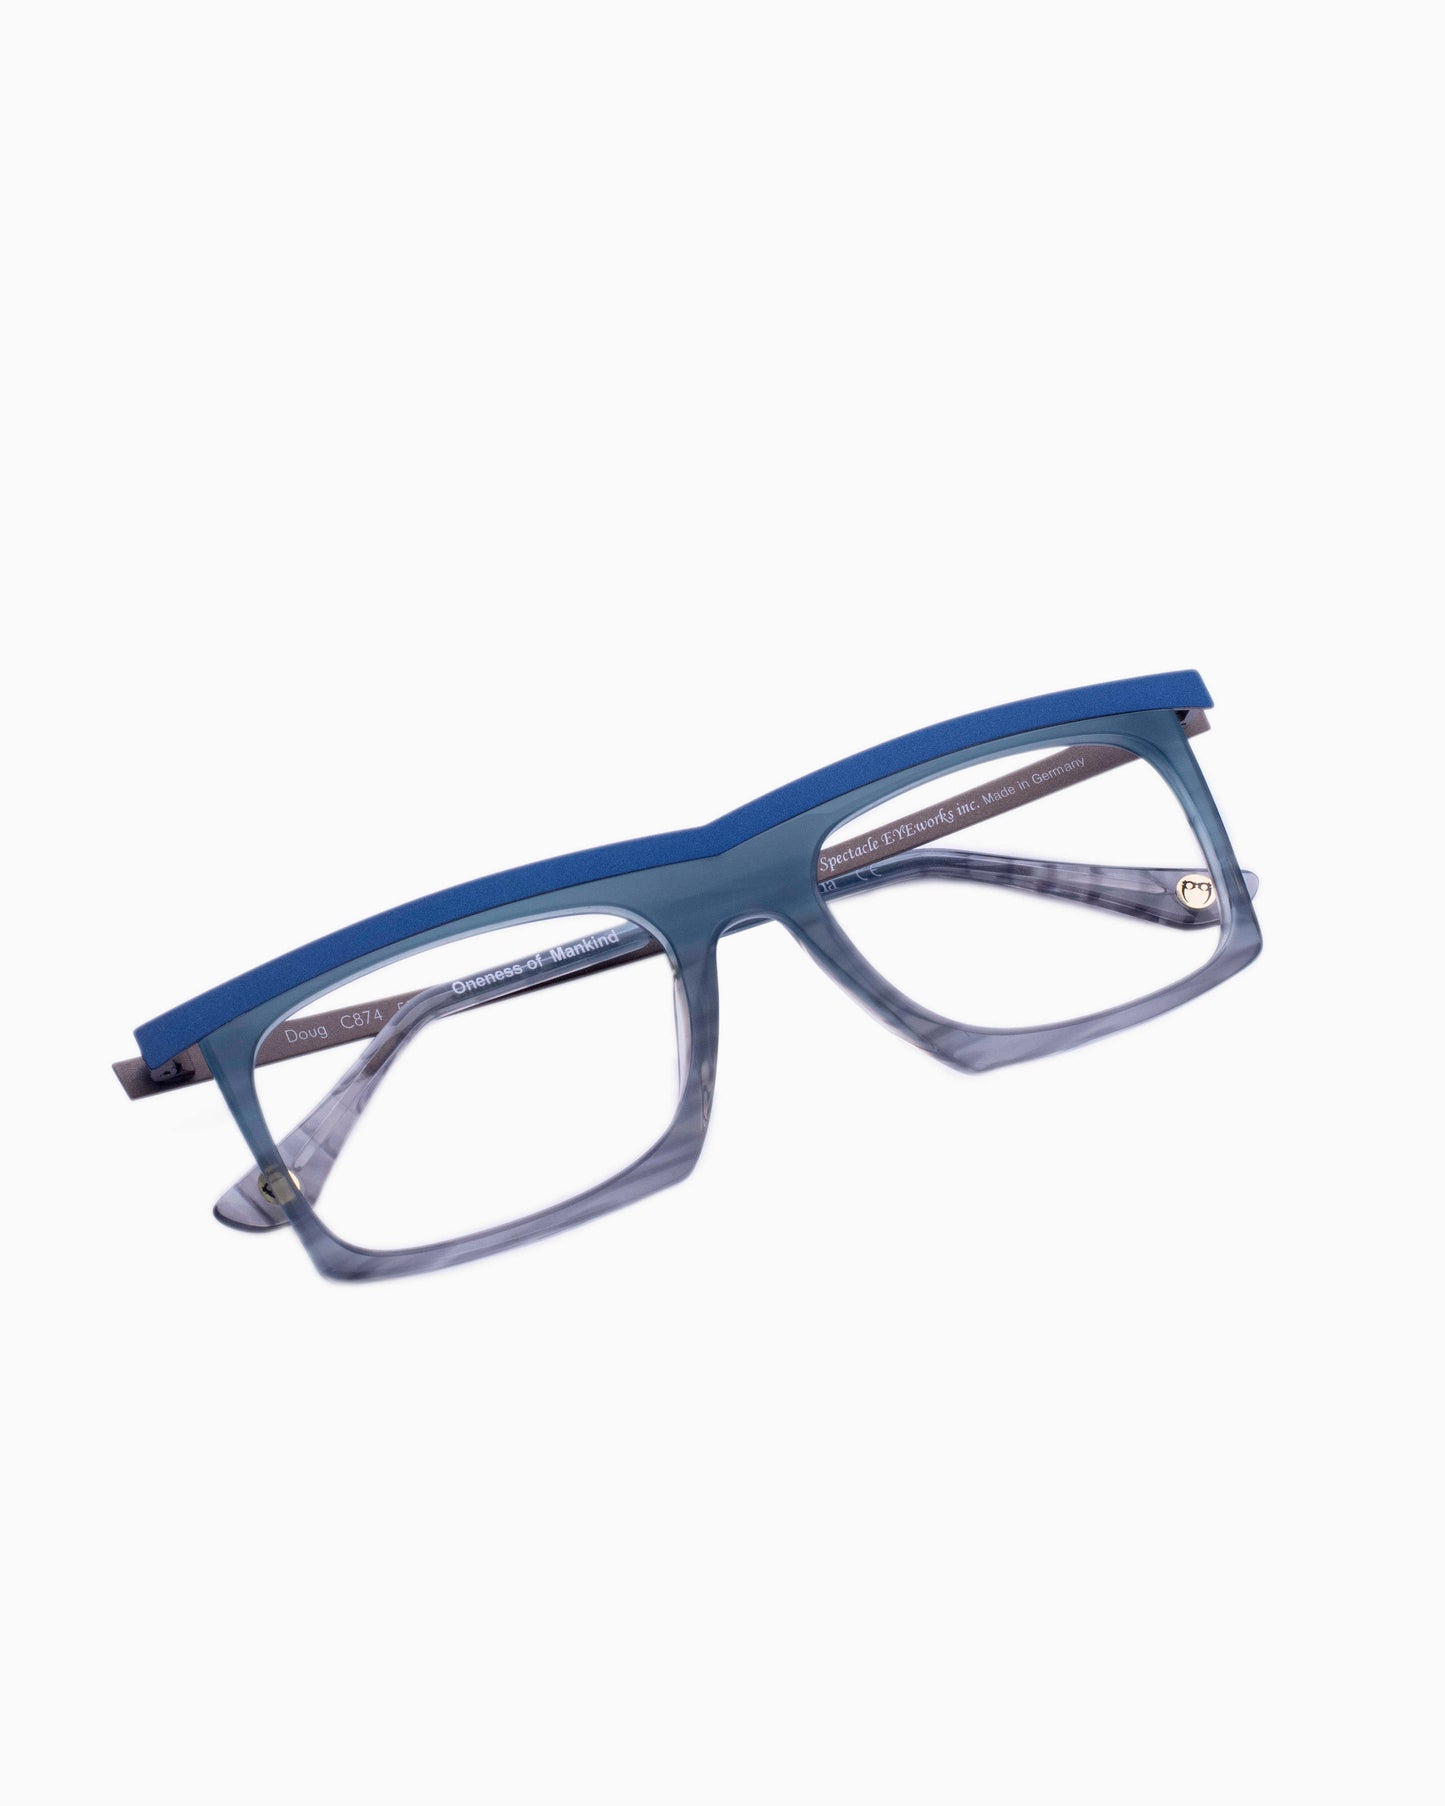 Spectacleeyeworks - Doug - C874 | glasses bar